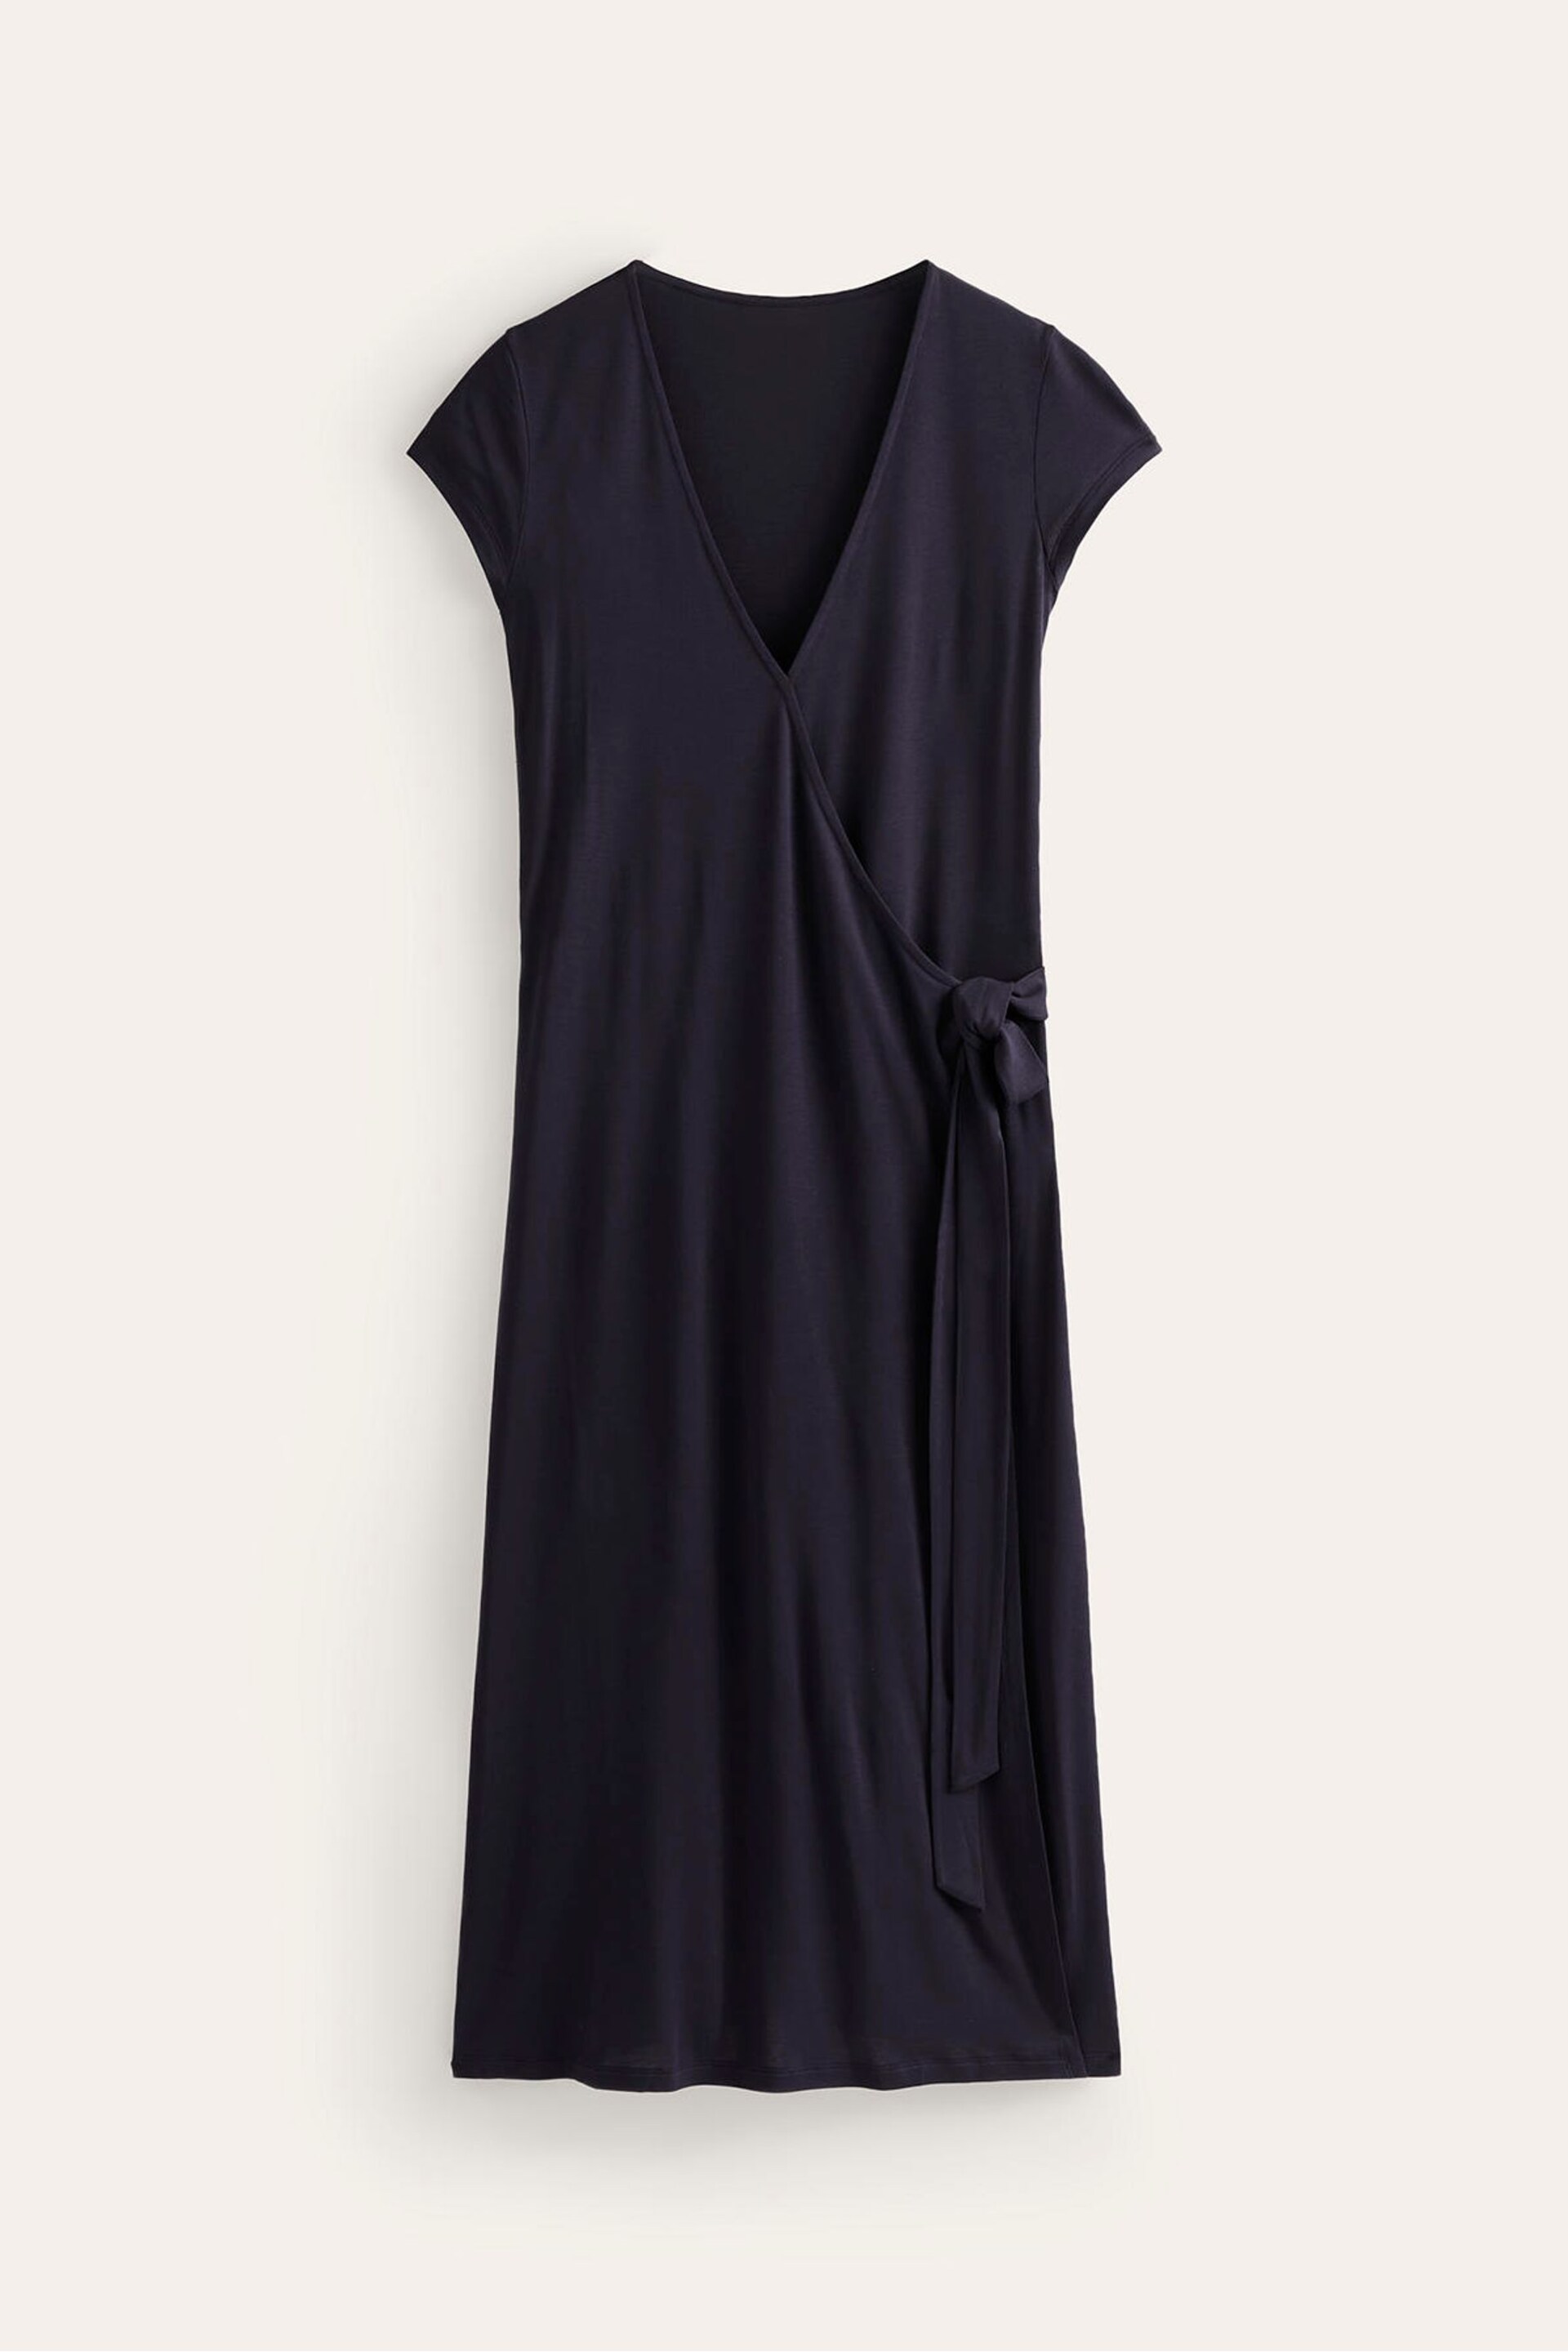 Boden Blue Joanna Cap Sleeve Wrap Dress - Image 5 of 5